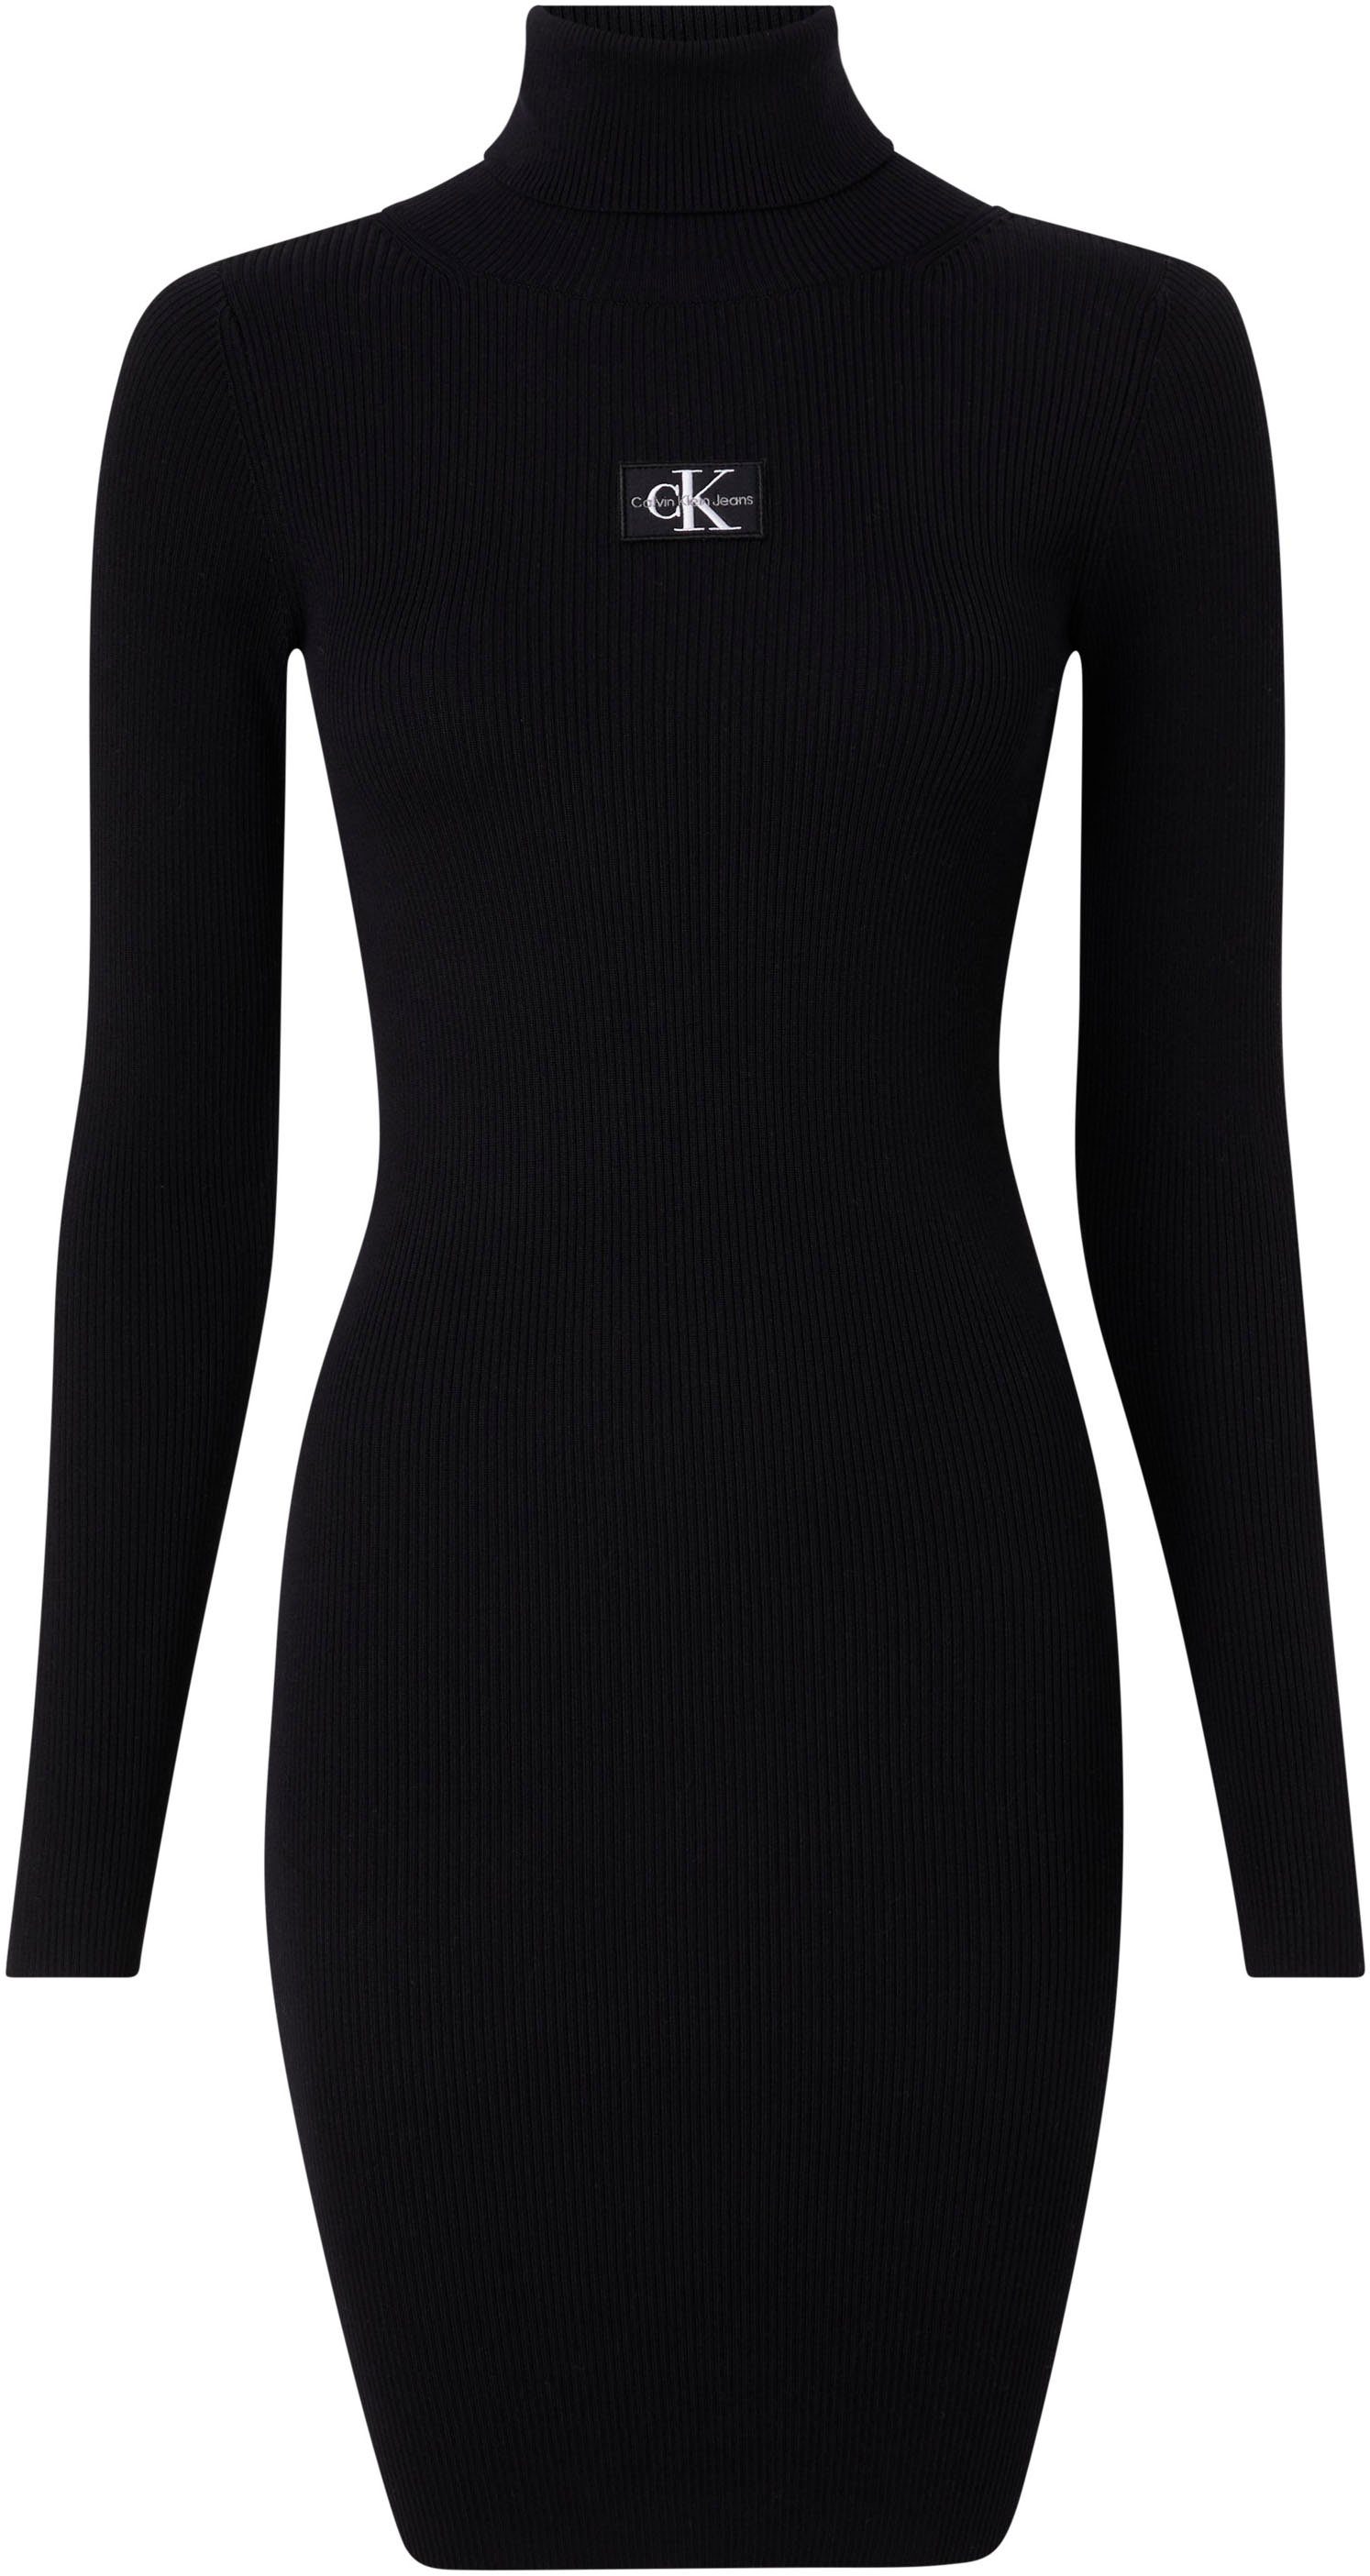 Strickkleid Klein ROLL Calvin BADGE Jeans Black SWEATER NECK Ck DRESS